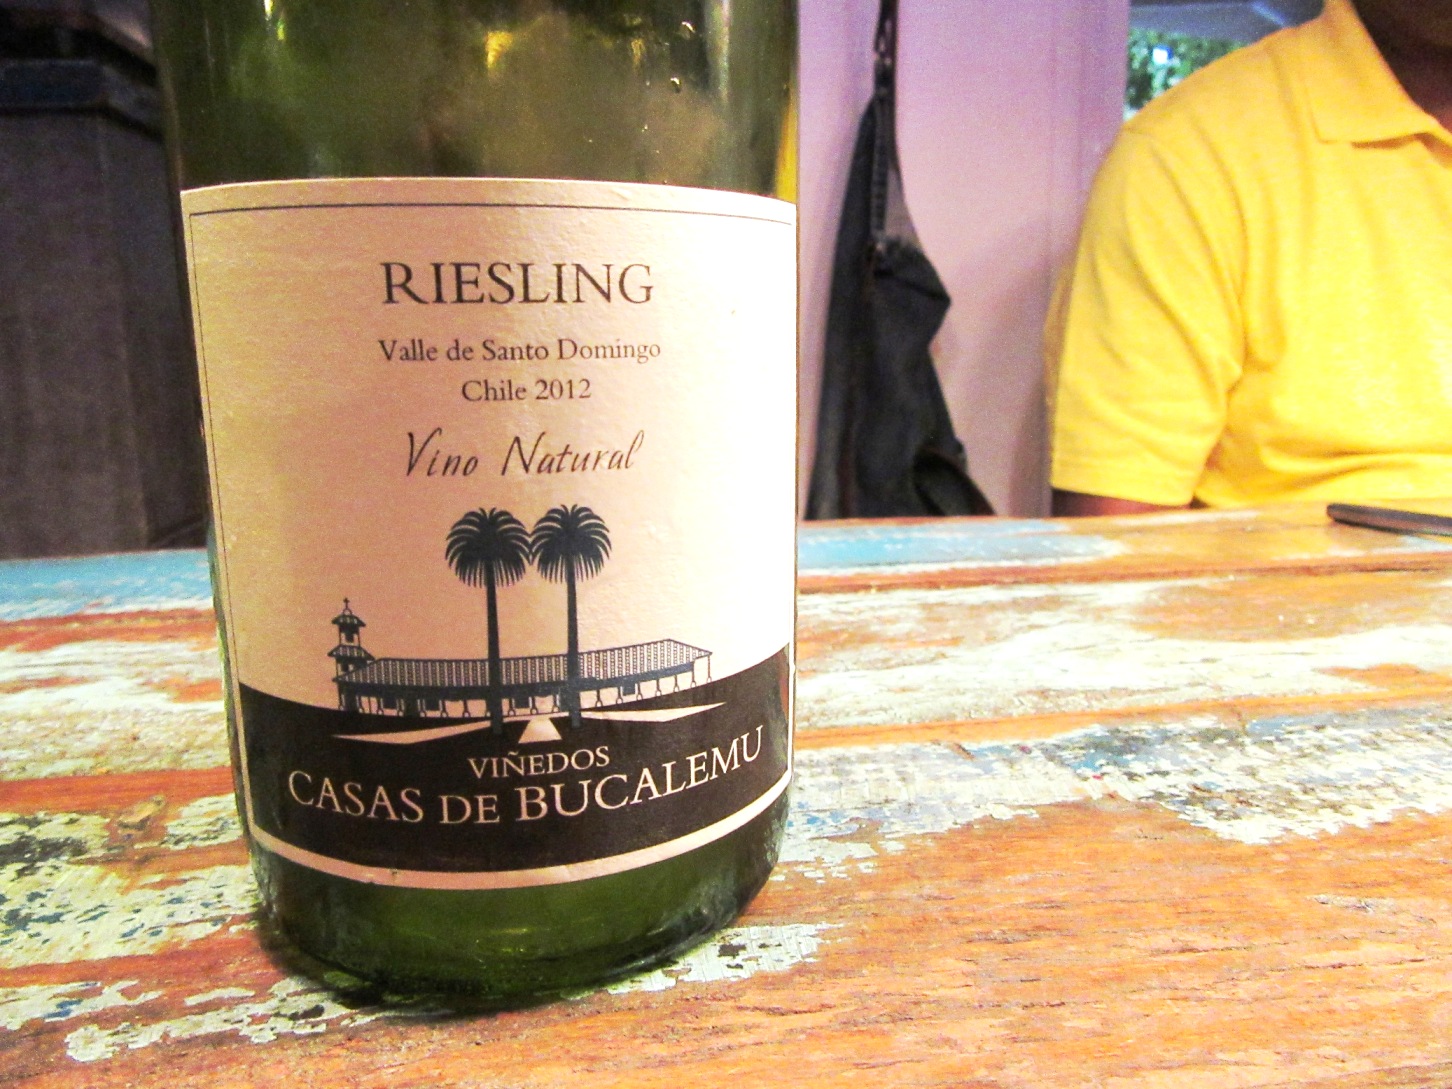 Vinedos Casas de Bucalemu, Riesling 2012, Vino Natural, Santo Domingo Valley, Chile, Wine Casual